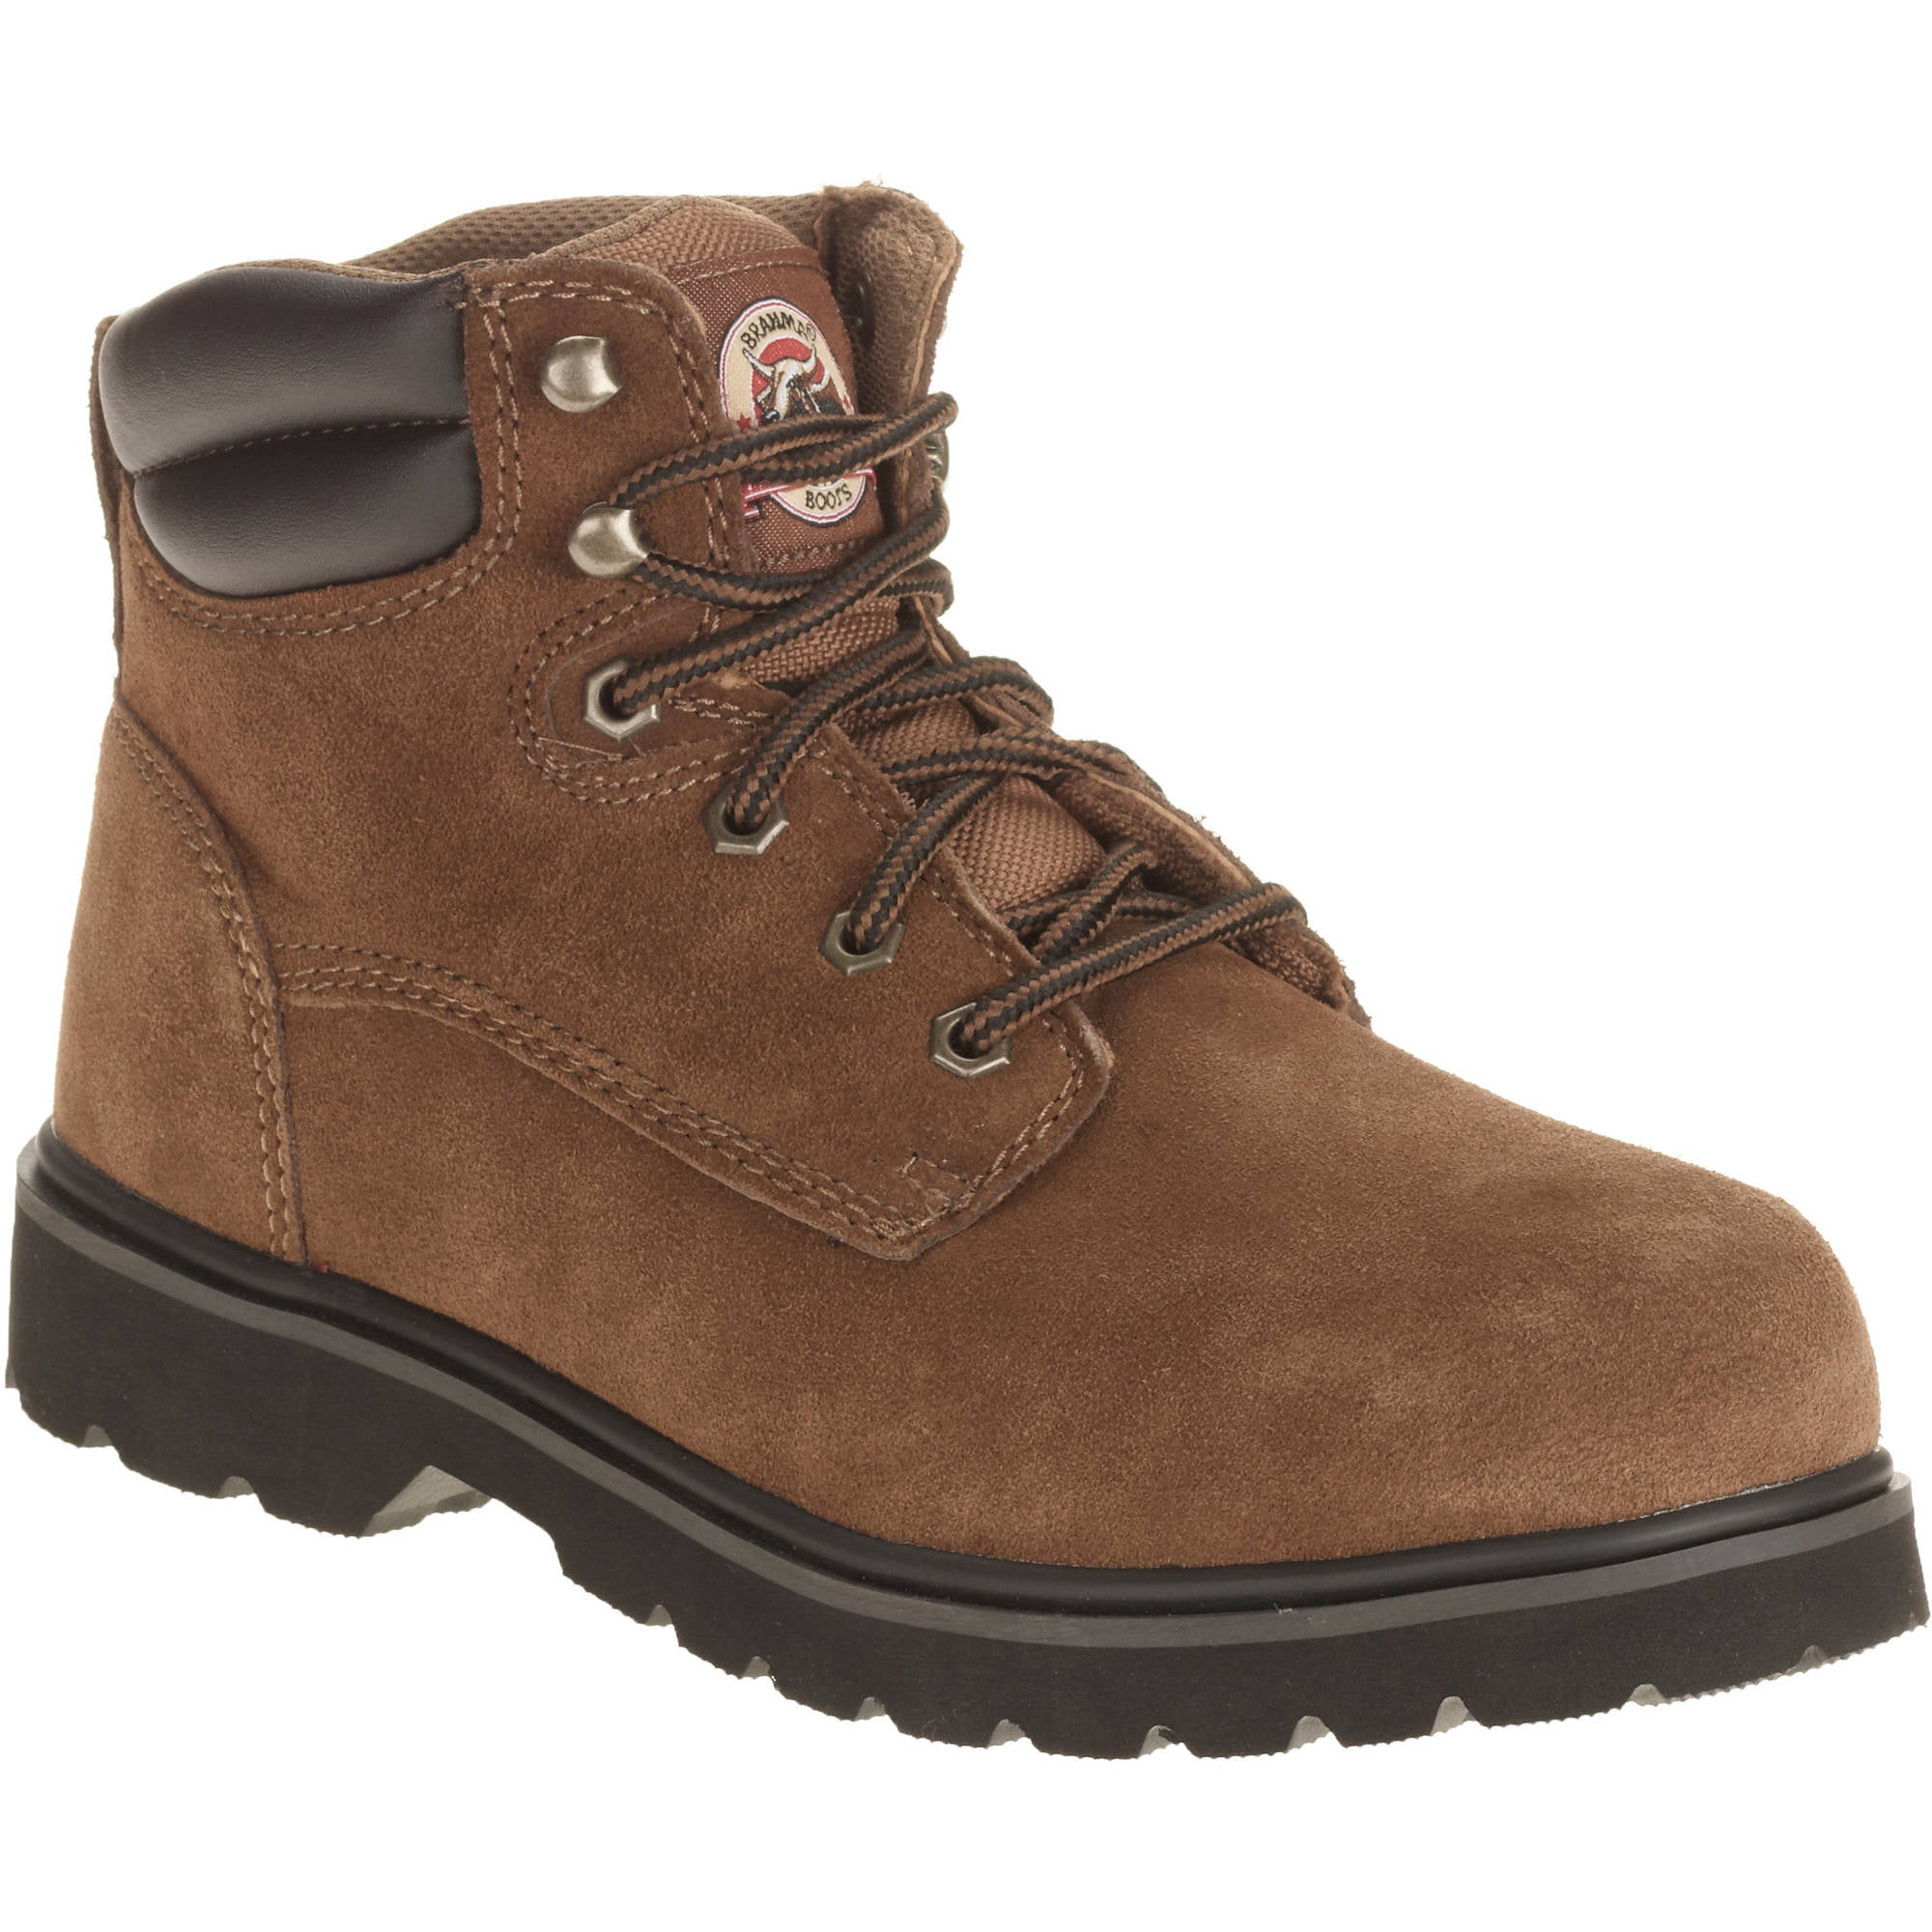 Women's Leather Work Boots - Walmart.com